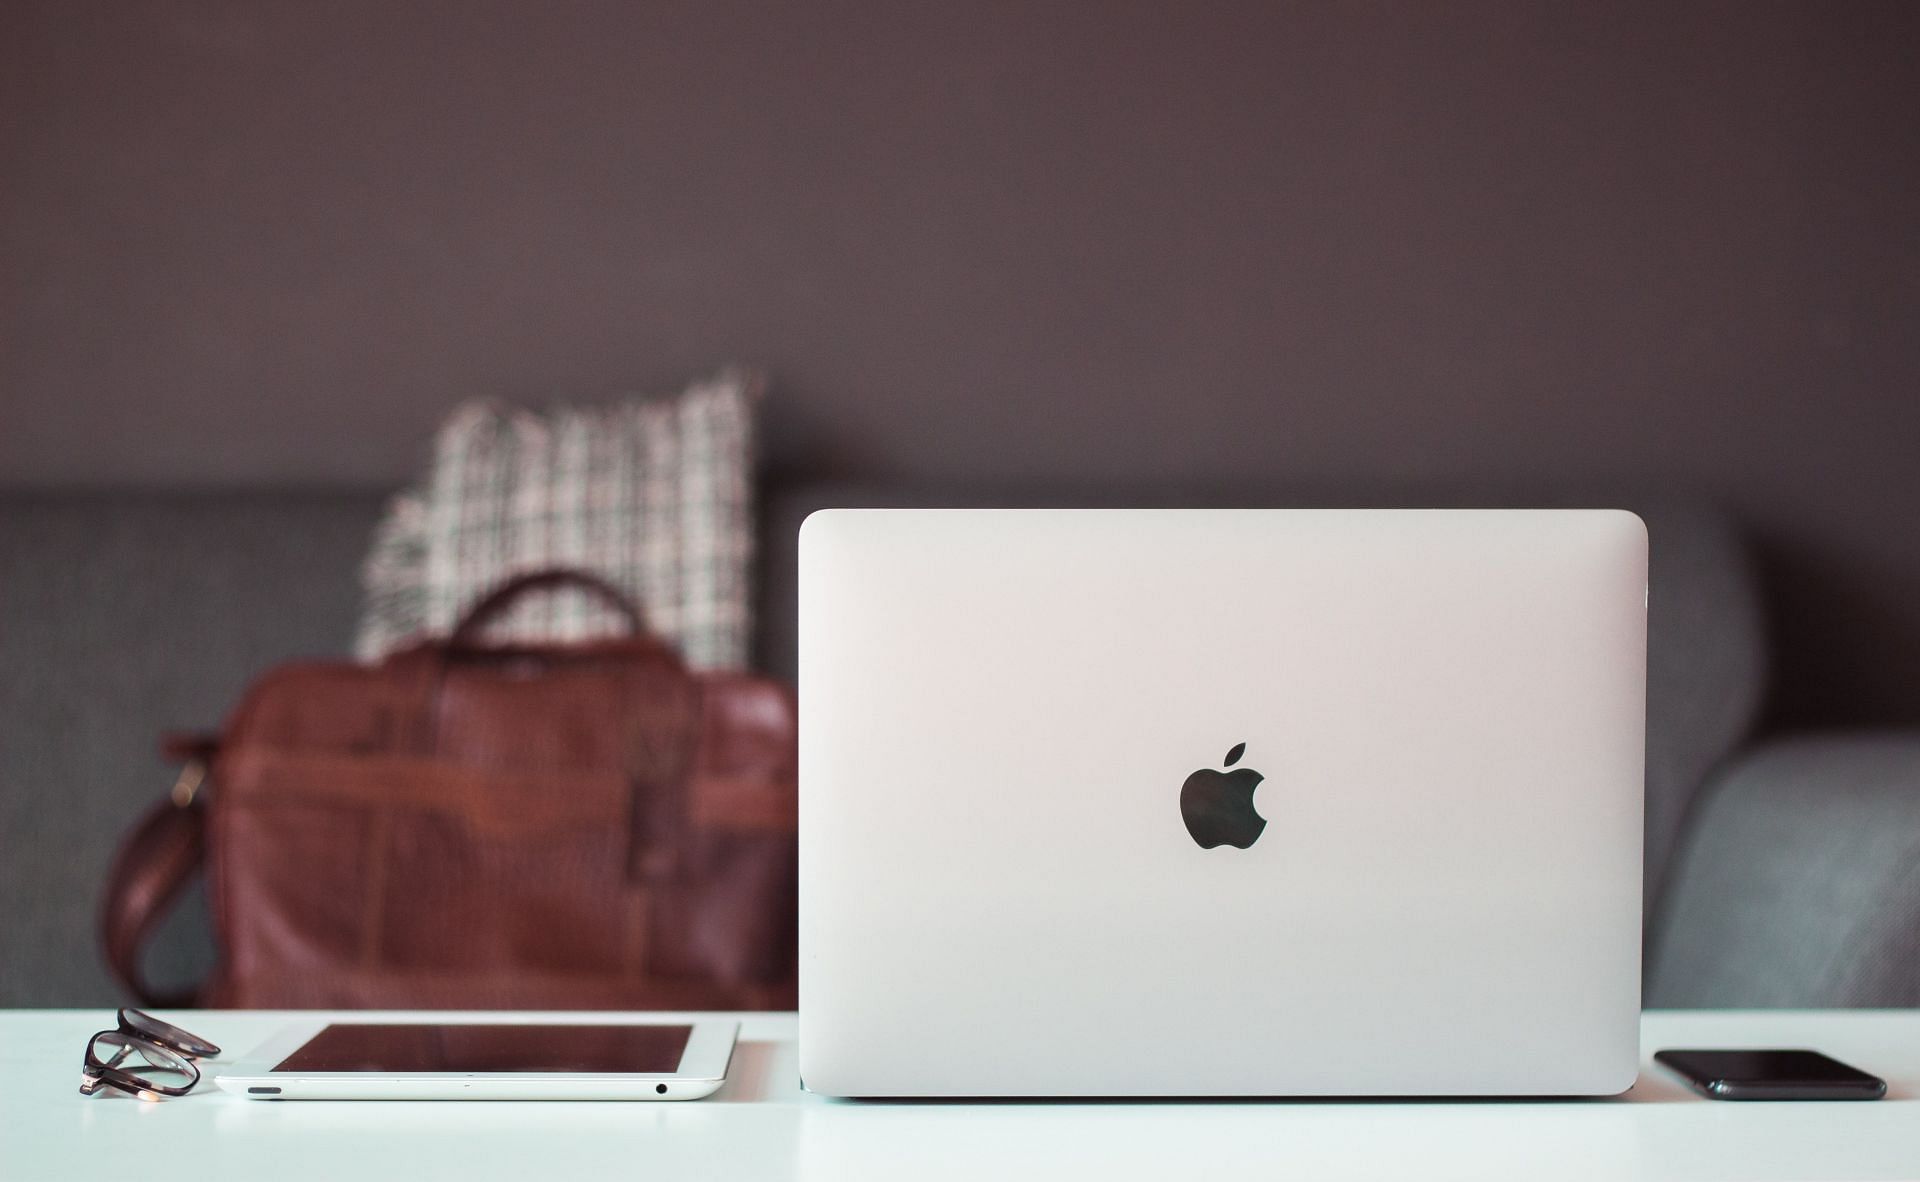 Finding the best external displays for Macbook (Image via Jonathan/Unsplash)